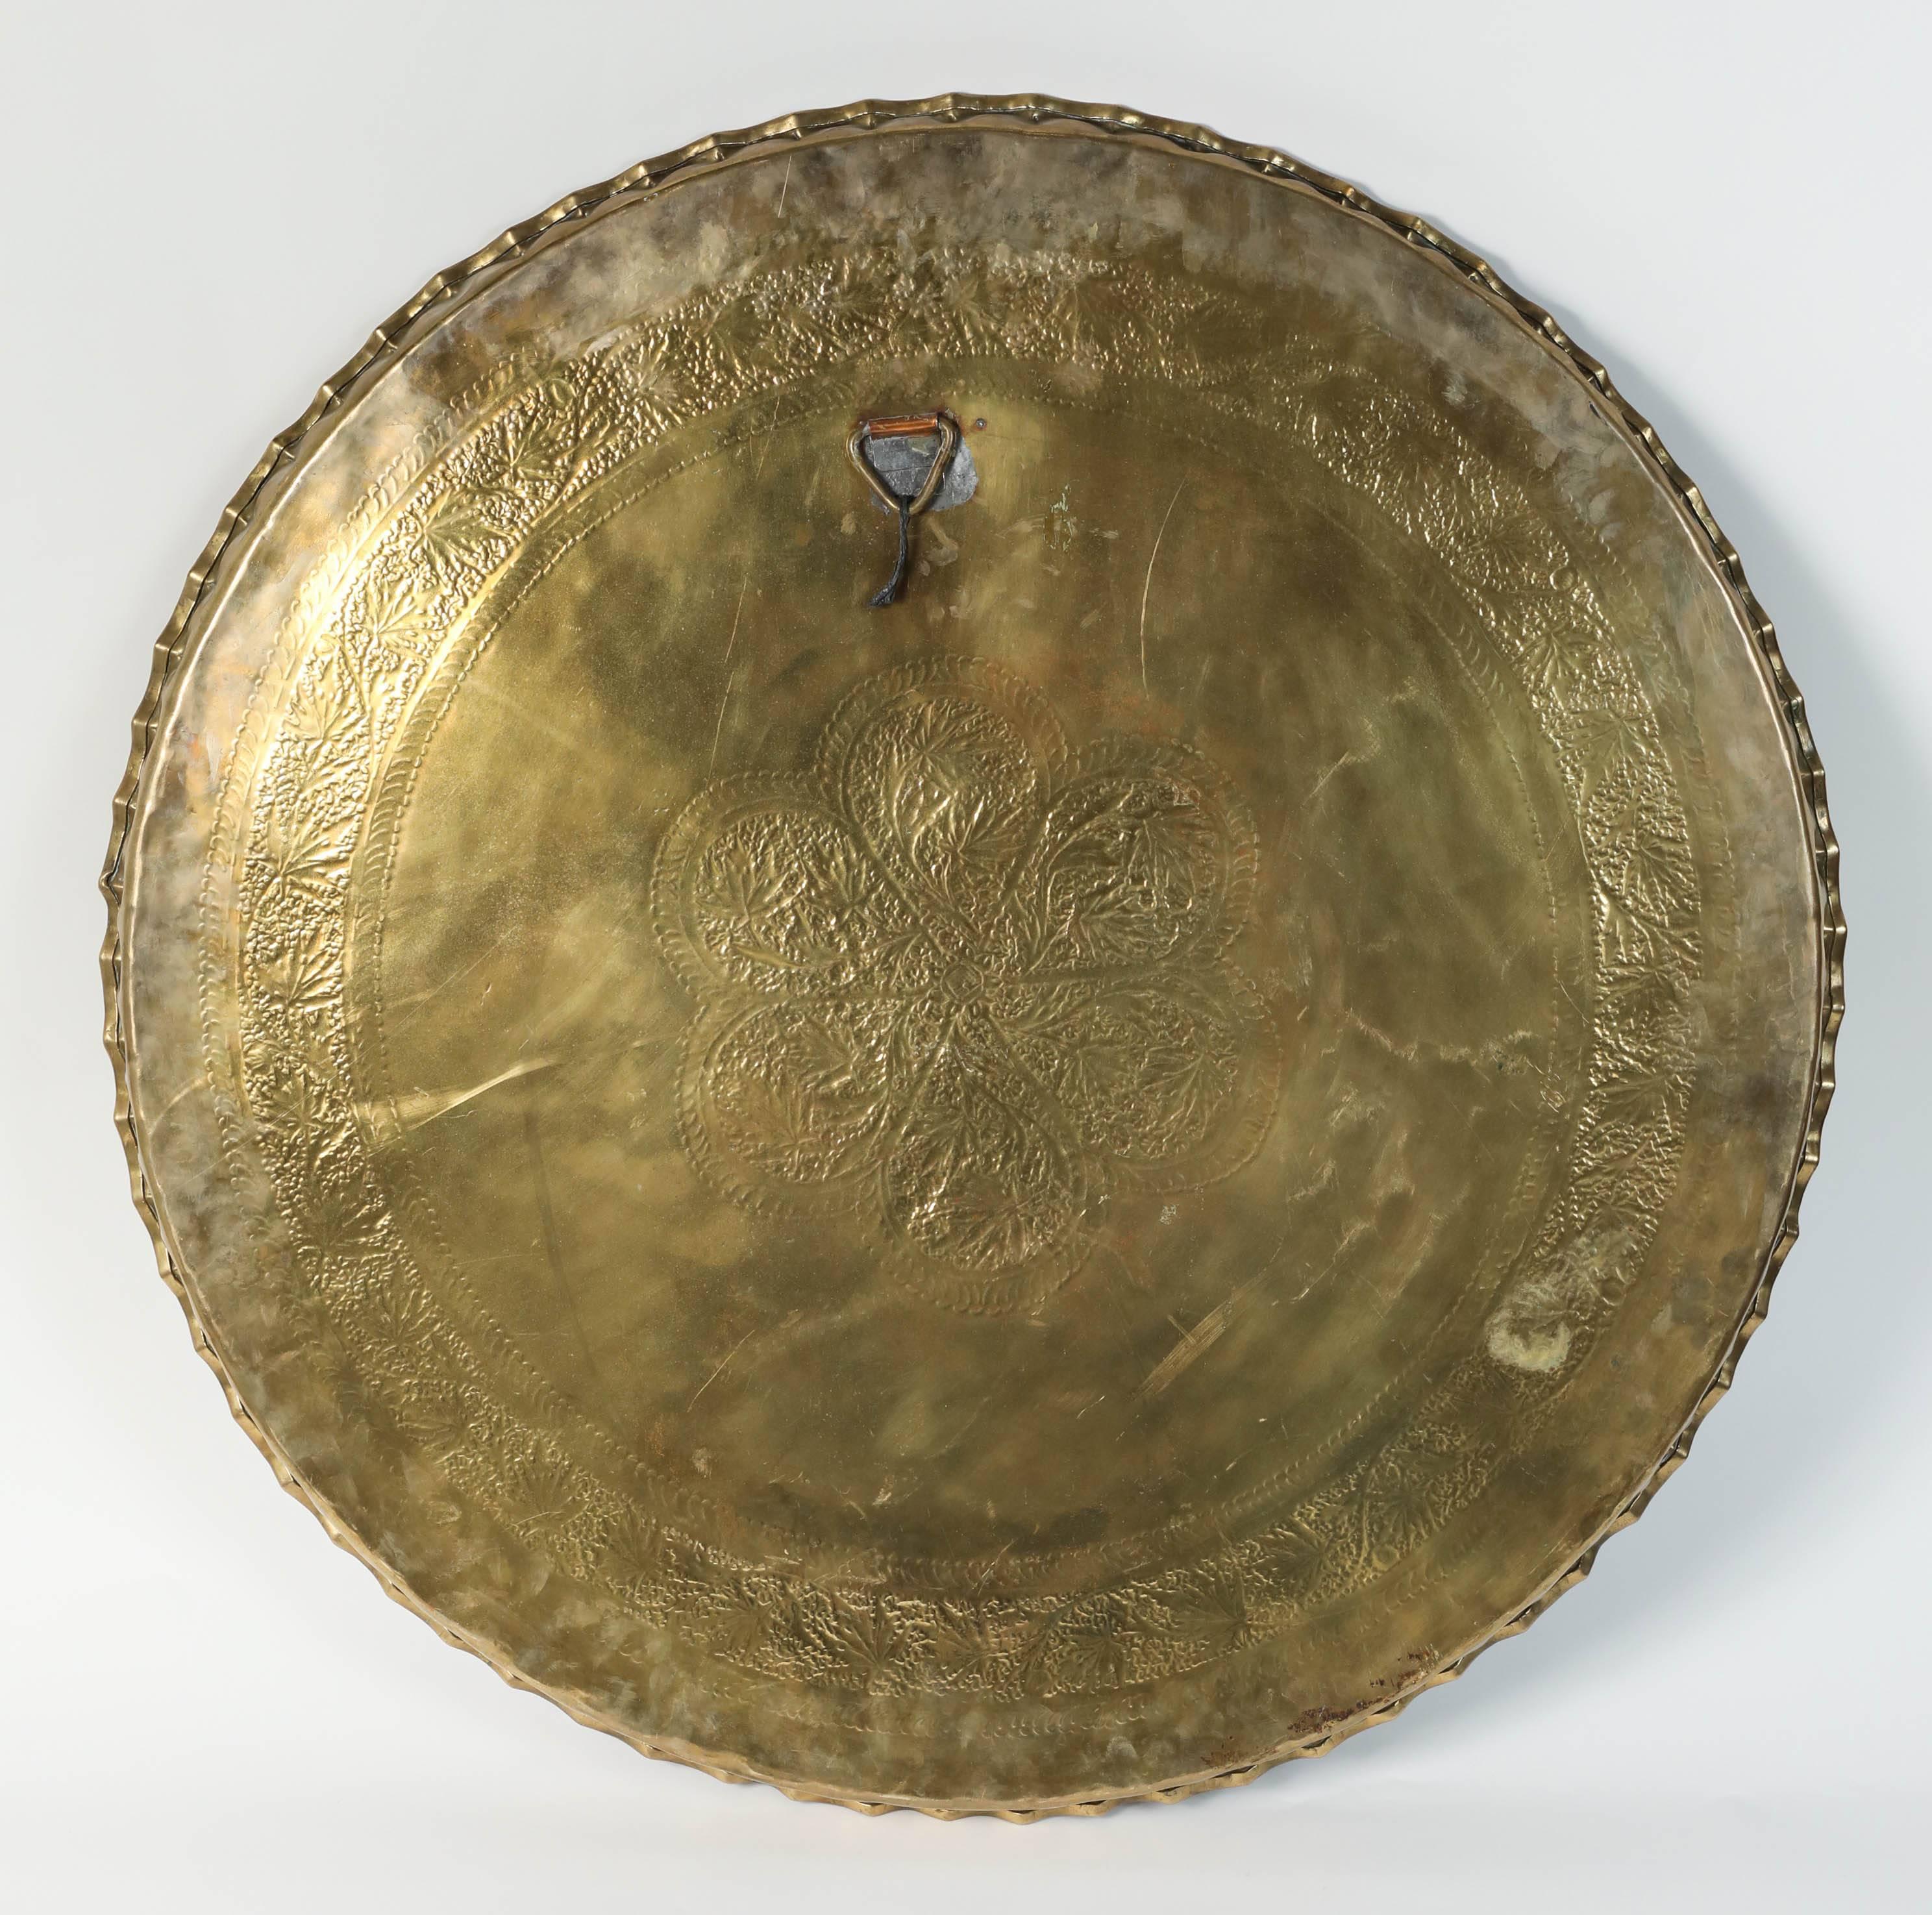 Islamic Large Moorish Middle Eastern Hanging Brass Tray Platter 36 Inches Diameter